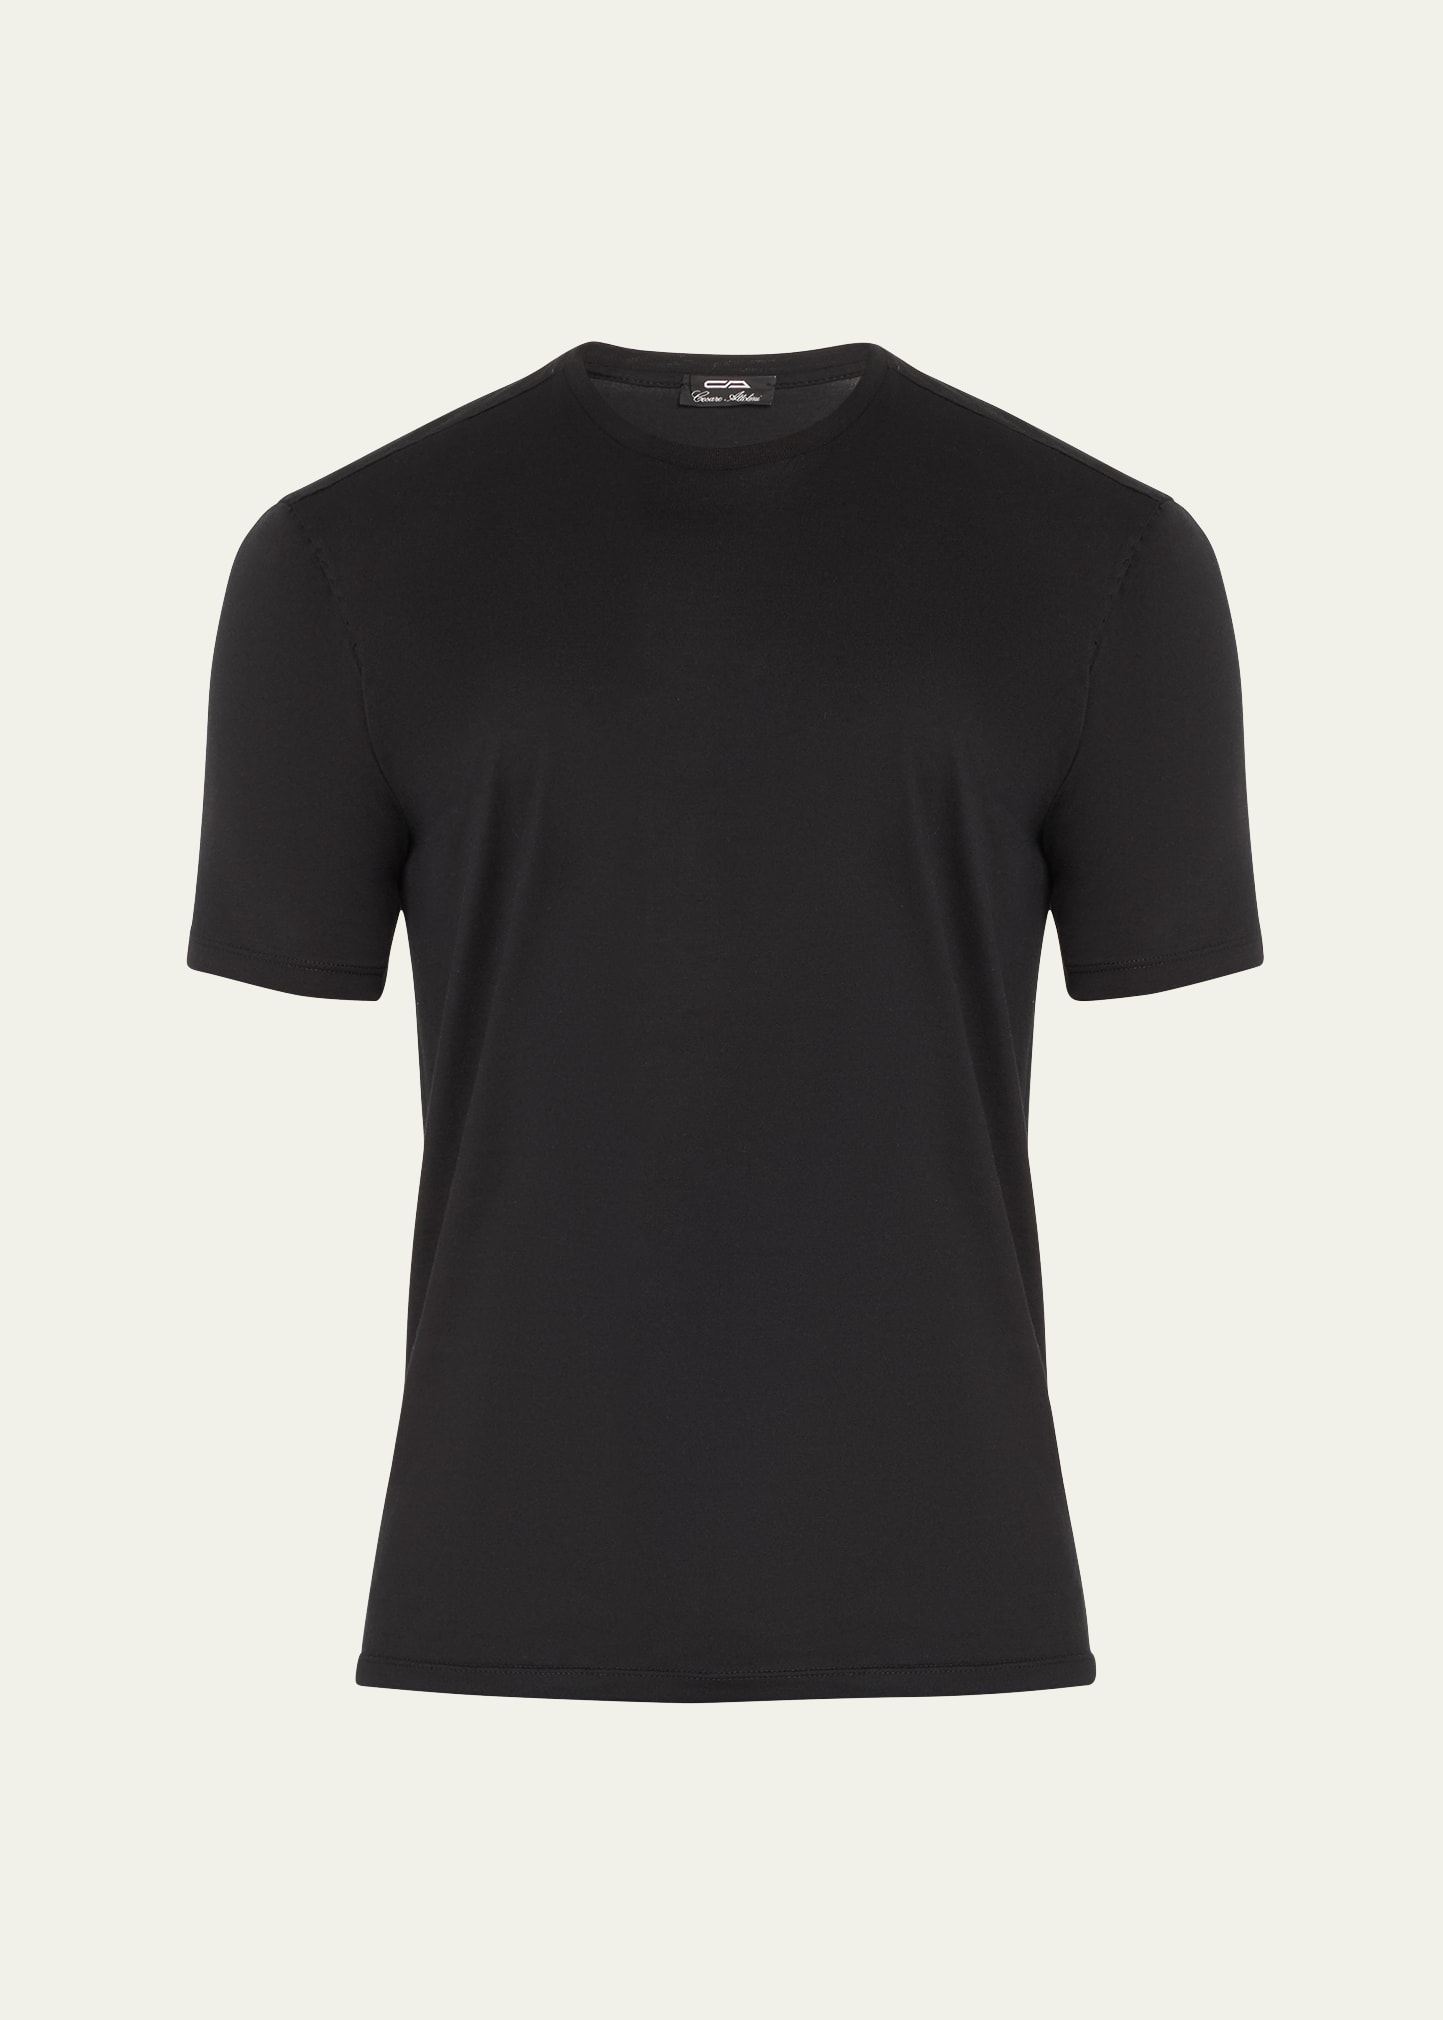 Cesare Attolini Men's Cotton Crew T-shirt In 016-black